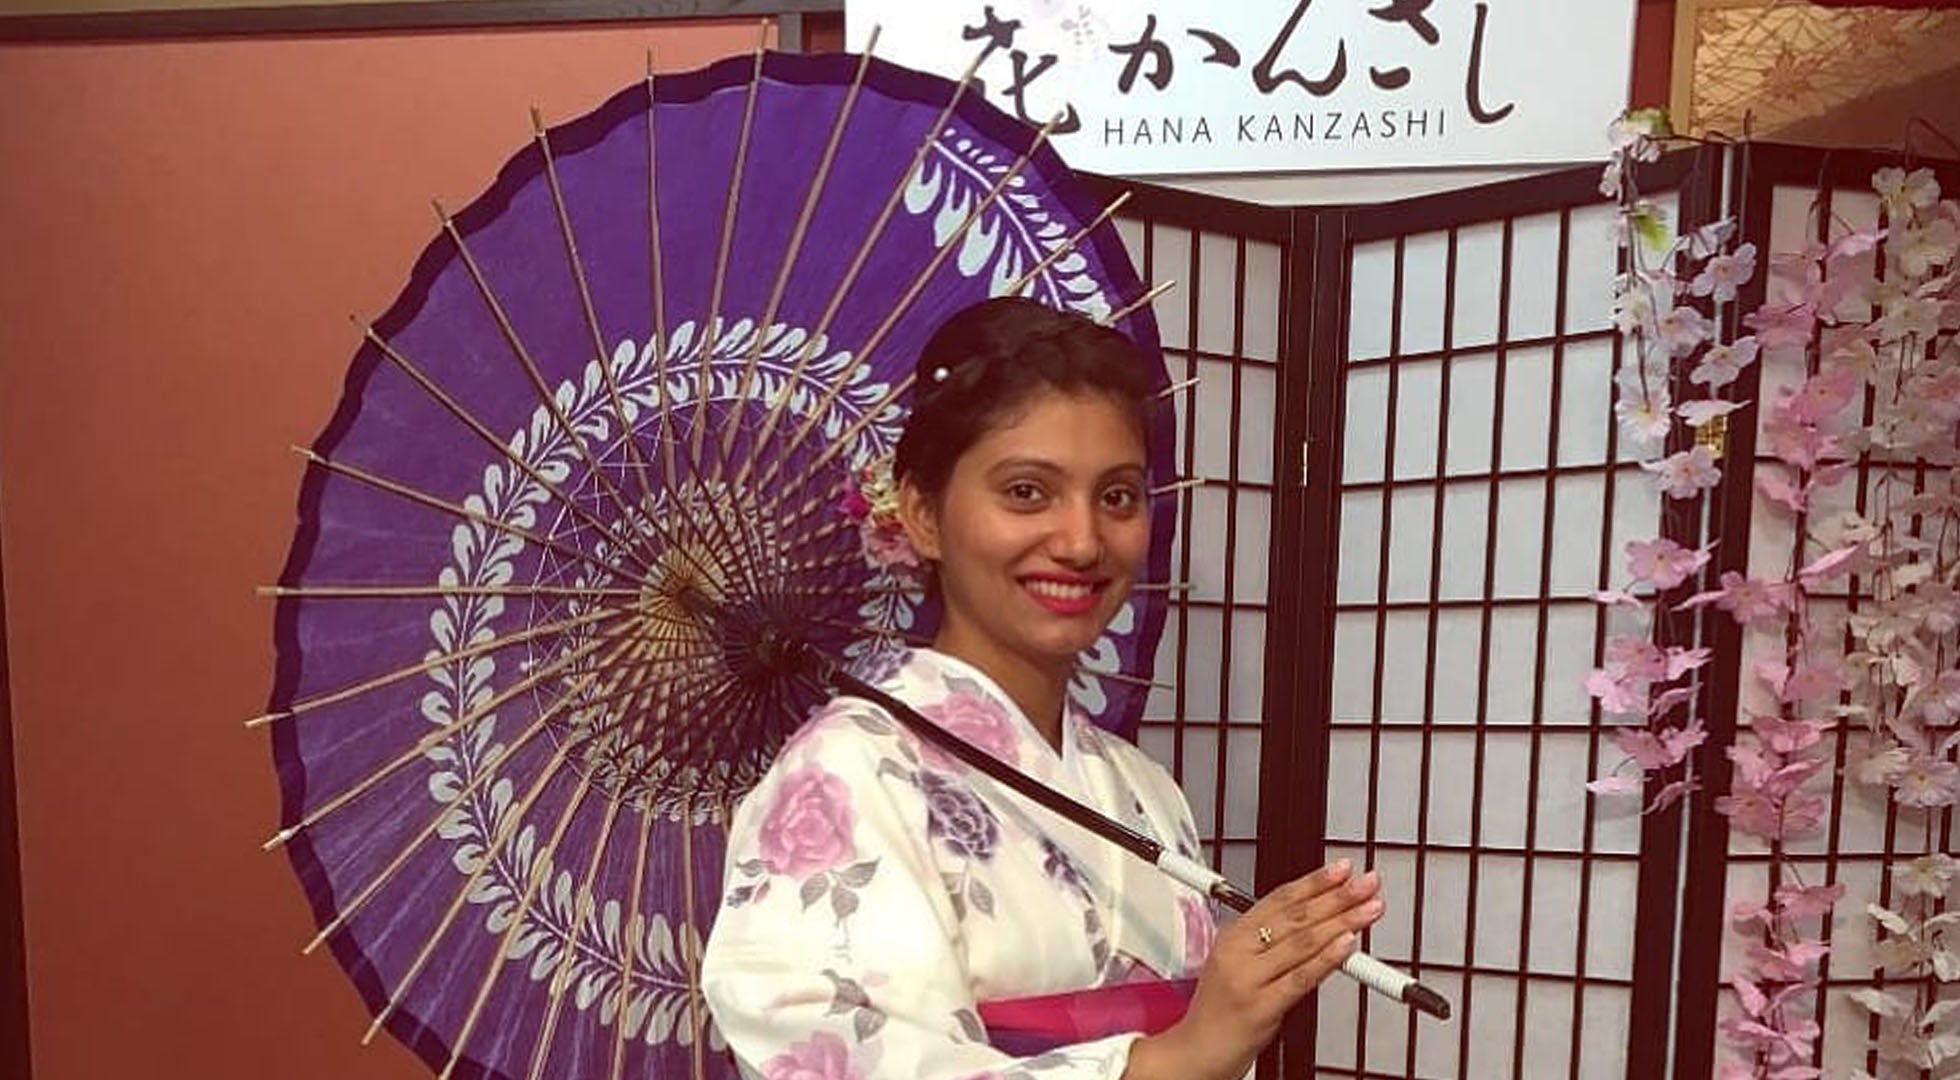  Where Tradition Meets Modernity: A Journey Through Japan- Eshita Swain, Travel Blogger 